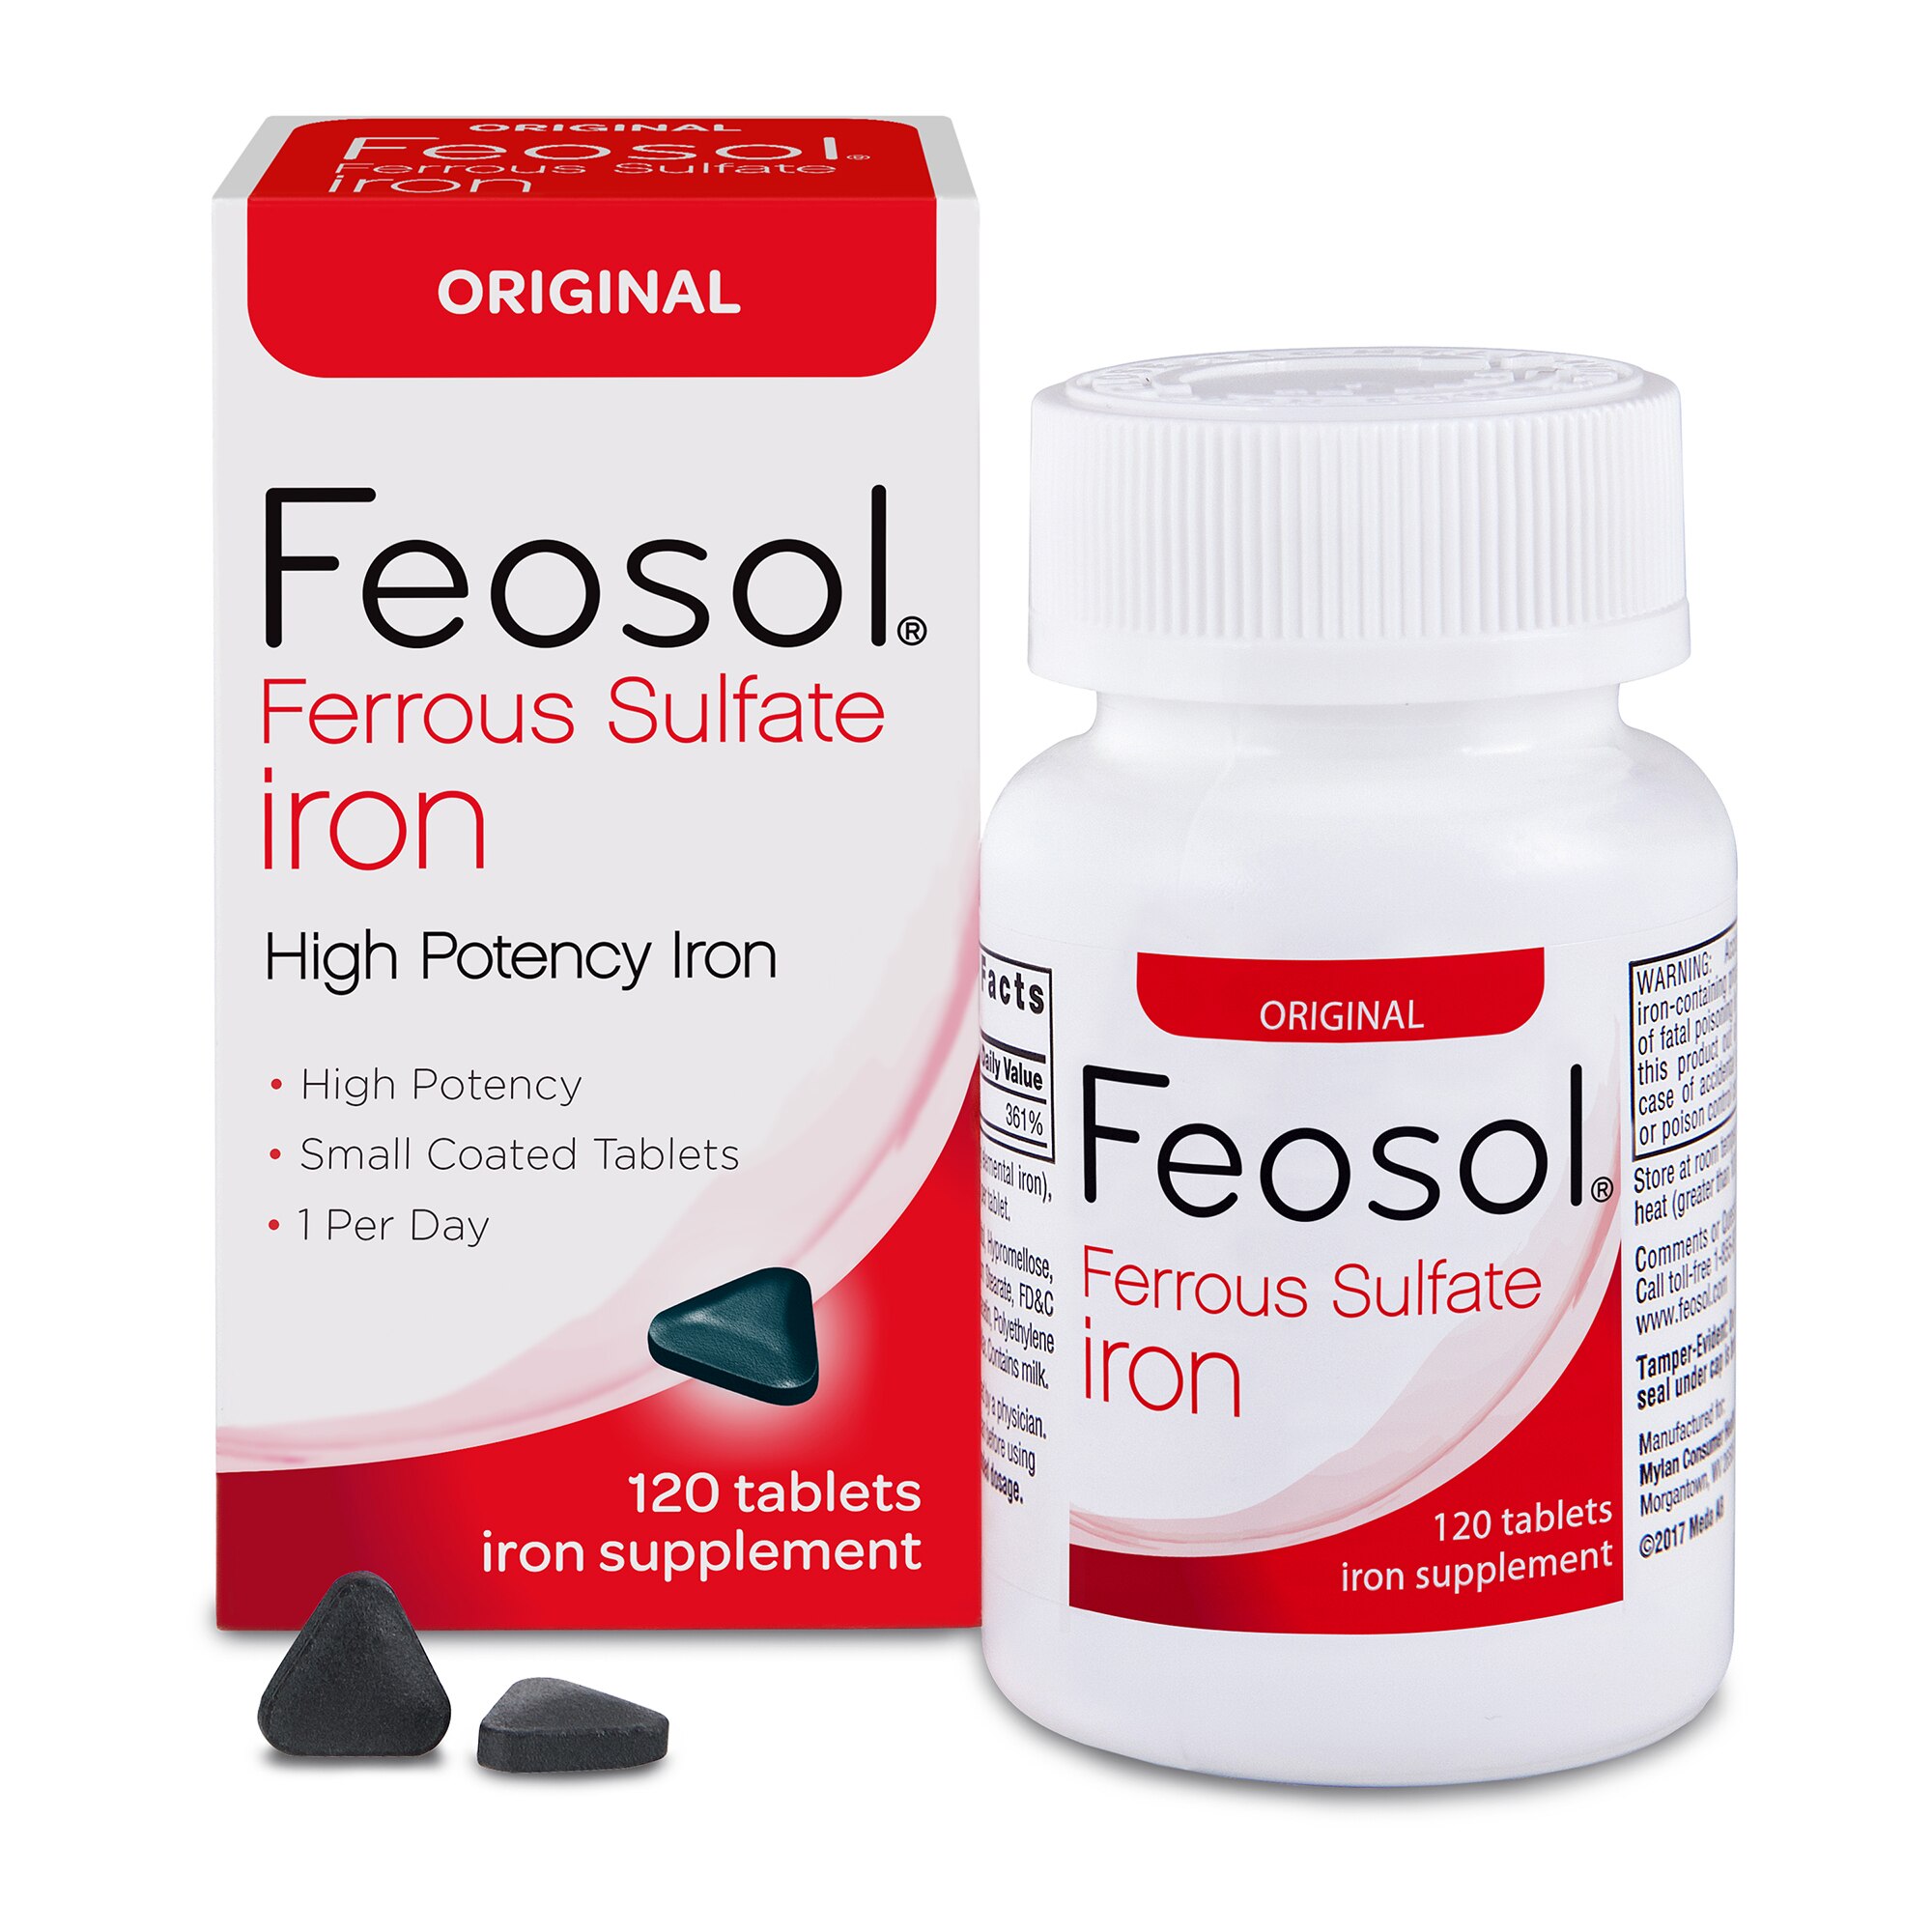 Feosol Original Iron Supplement Tablets, 120 CT